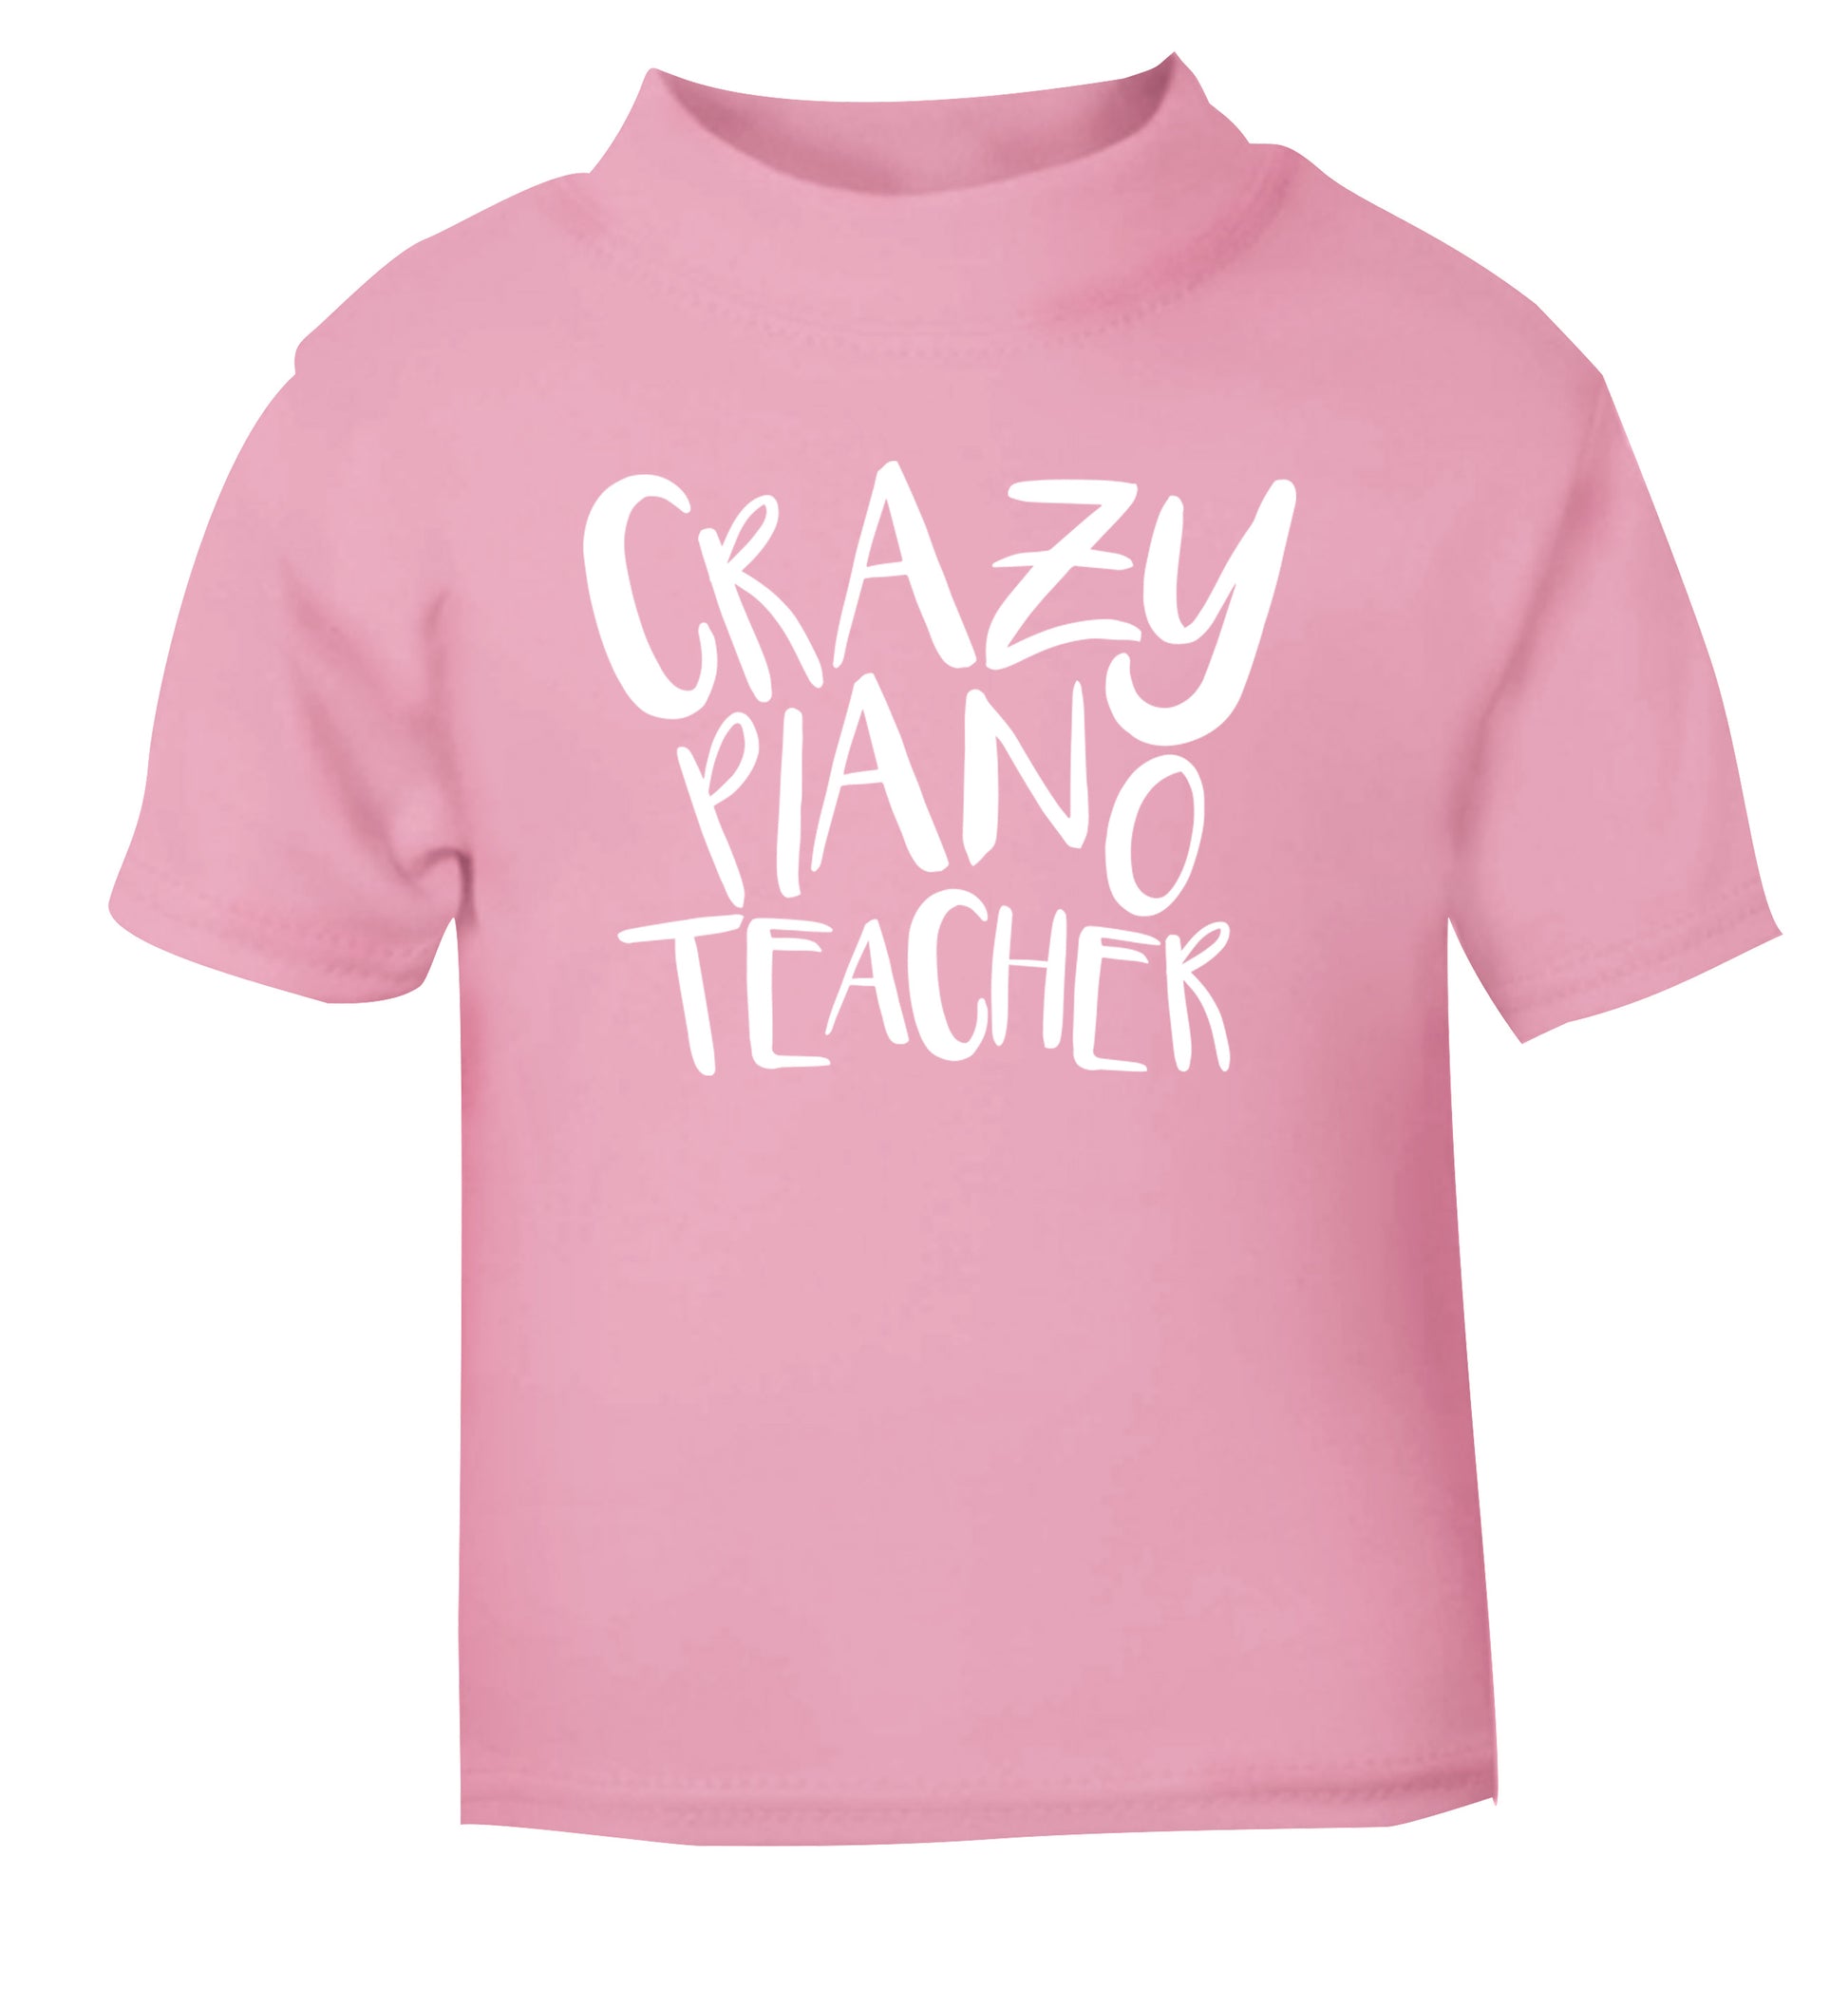 Crazy piano teacher light pink Baby Toddler Tshirt 2 Years